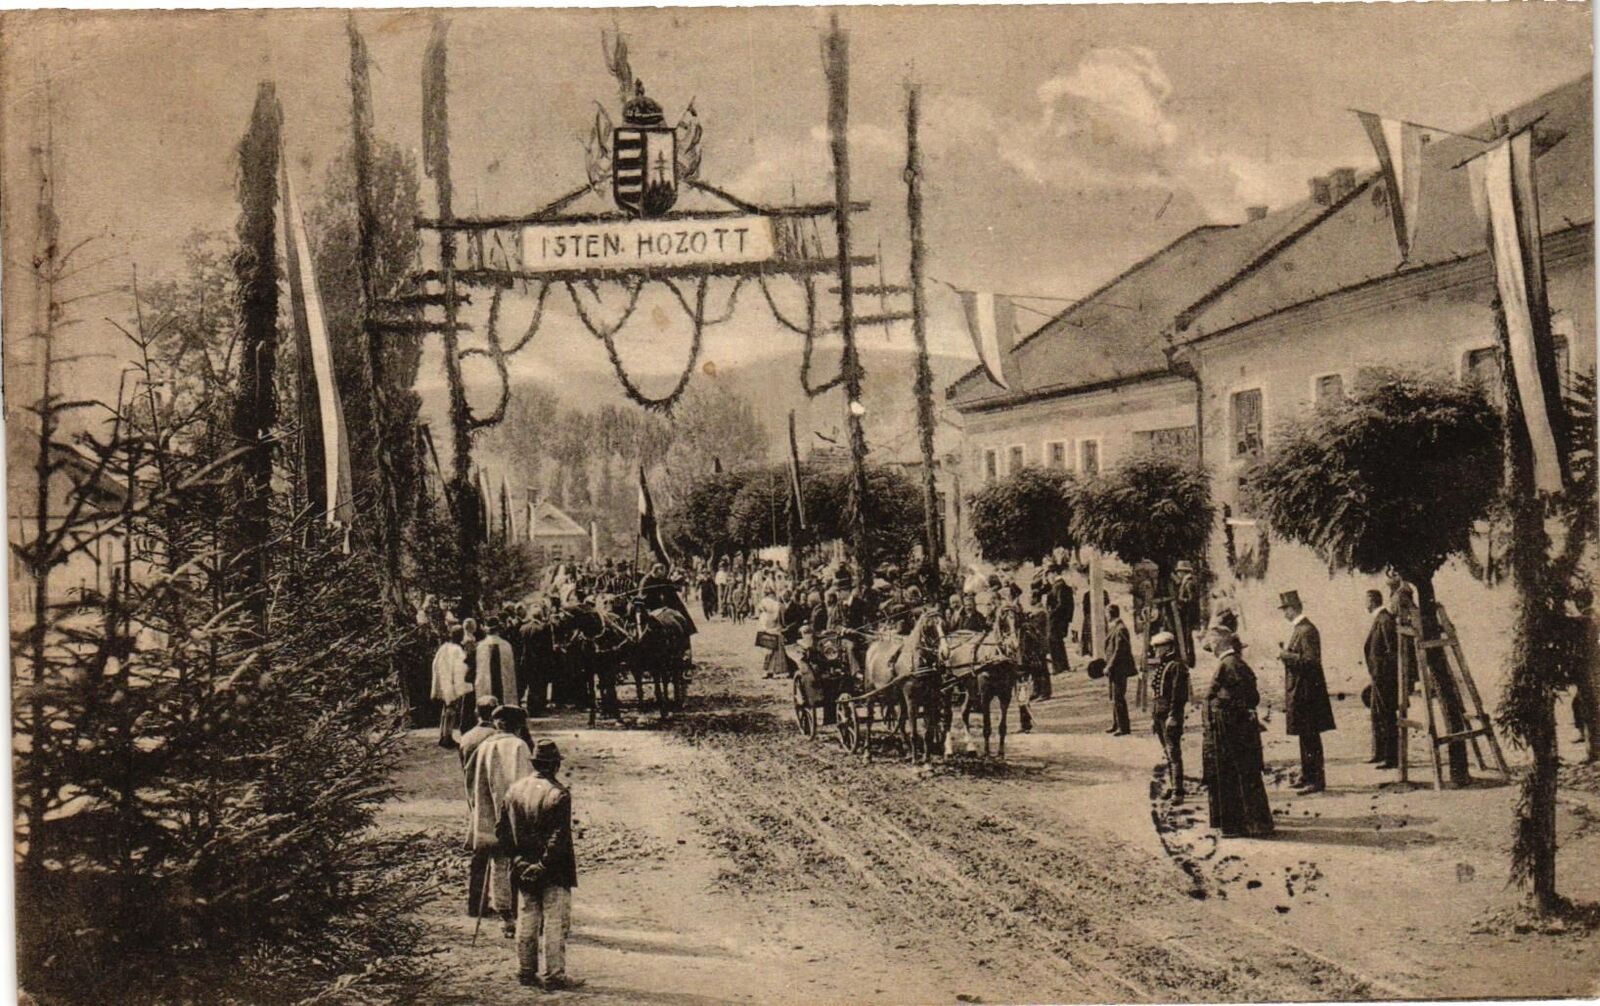 Vintage Postcard- A crowded street